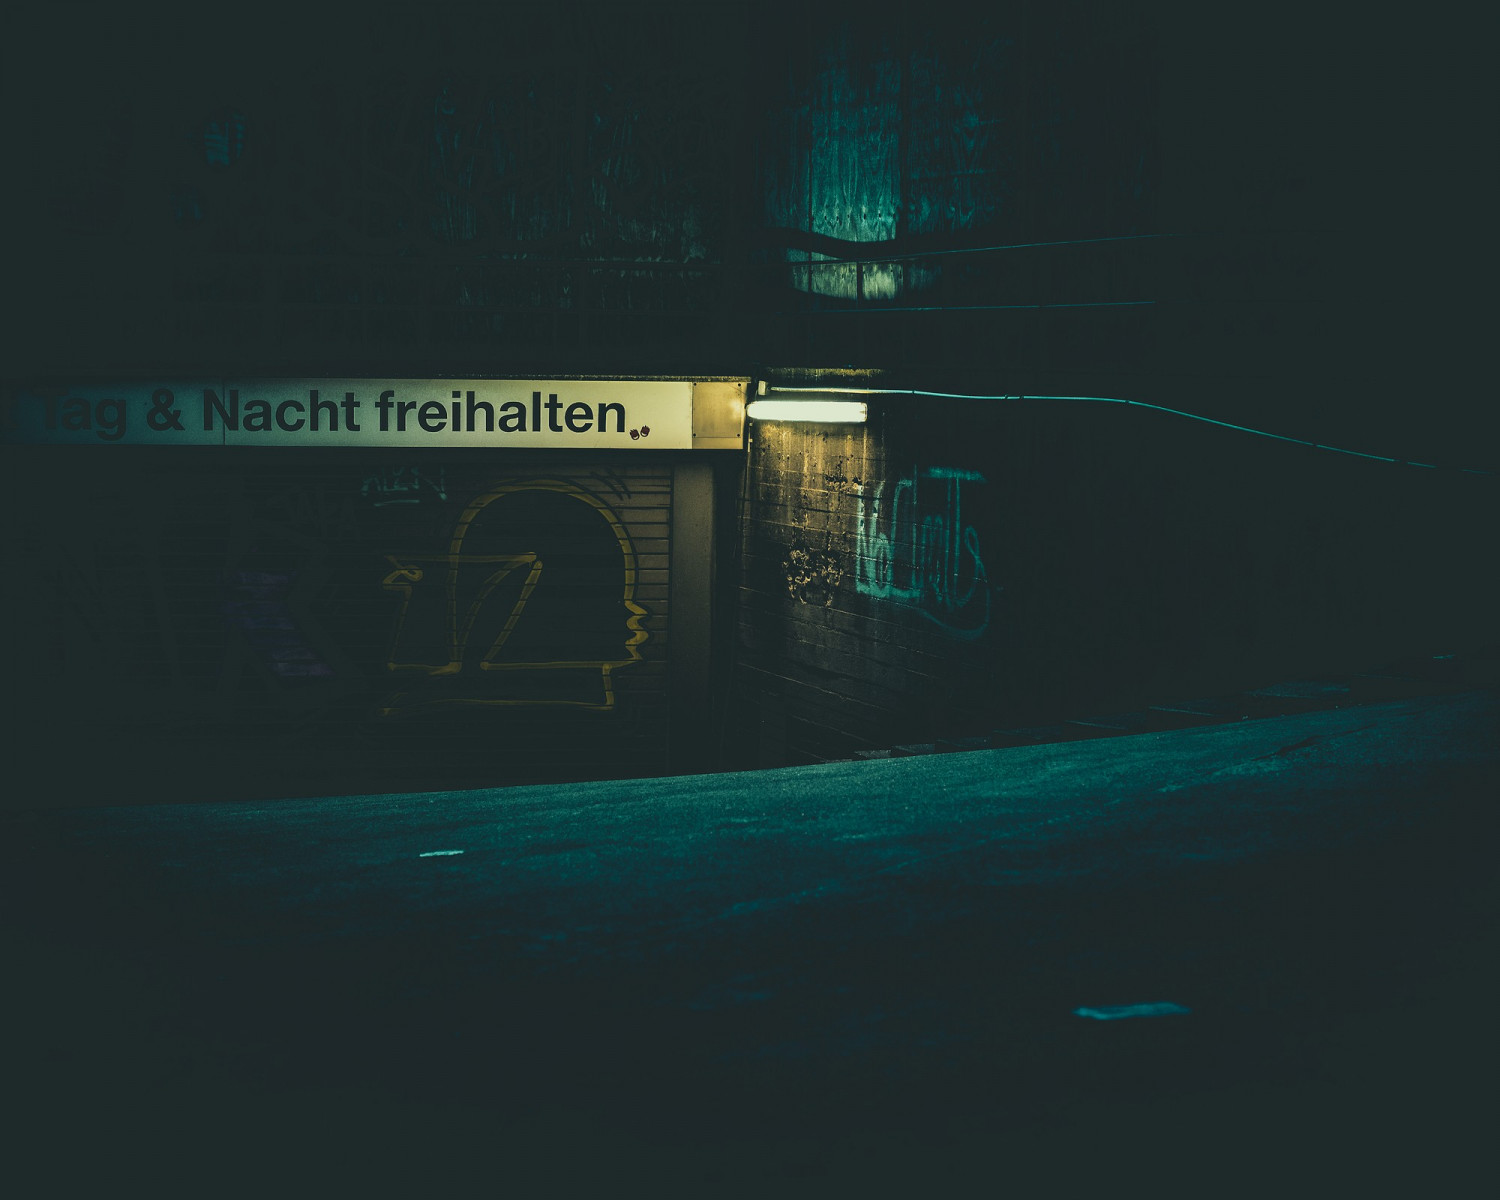 https://toh.photography/media/pages/portfolio/frankfurt-at-night/7ef48b0264-1608653797/frankfurt-at-night019.jpg